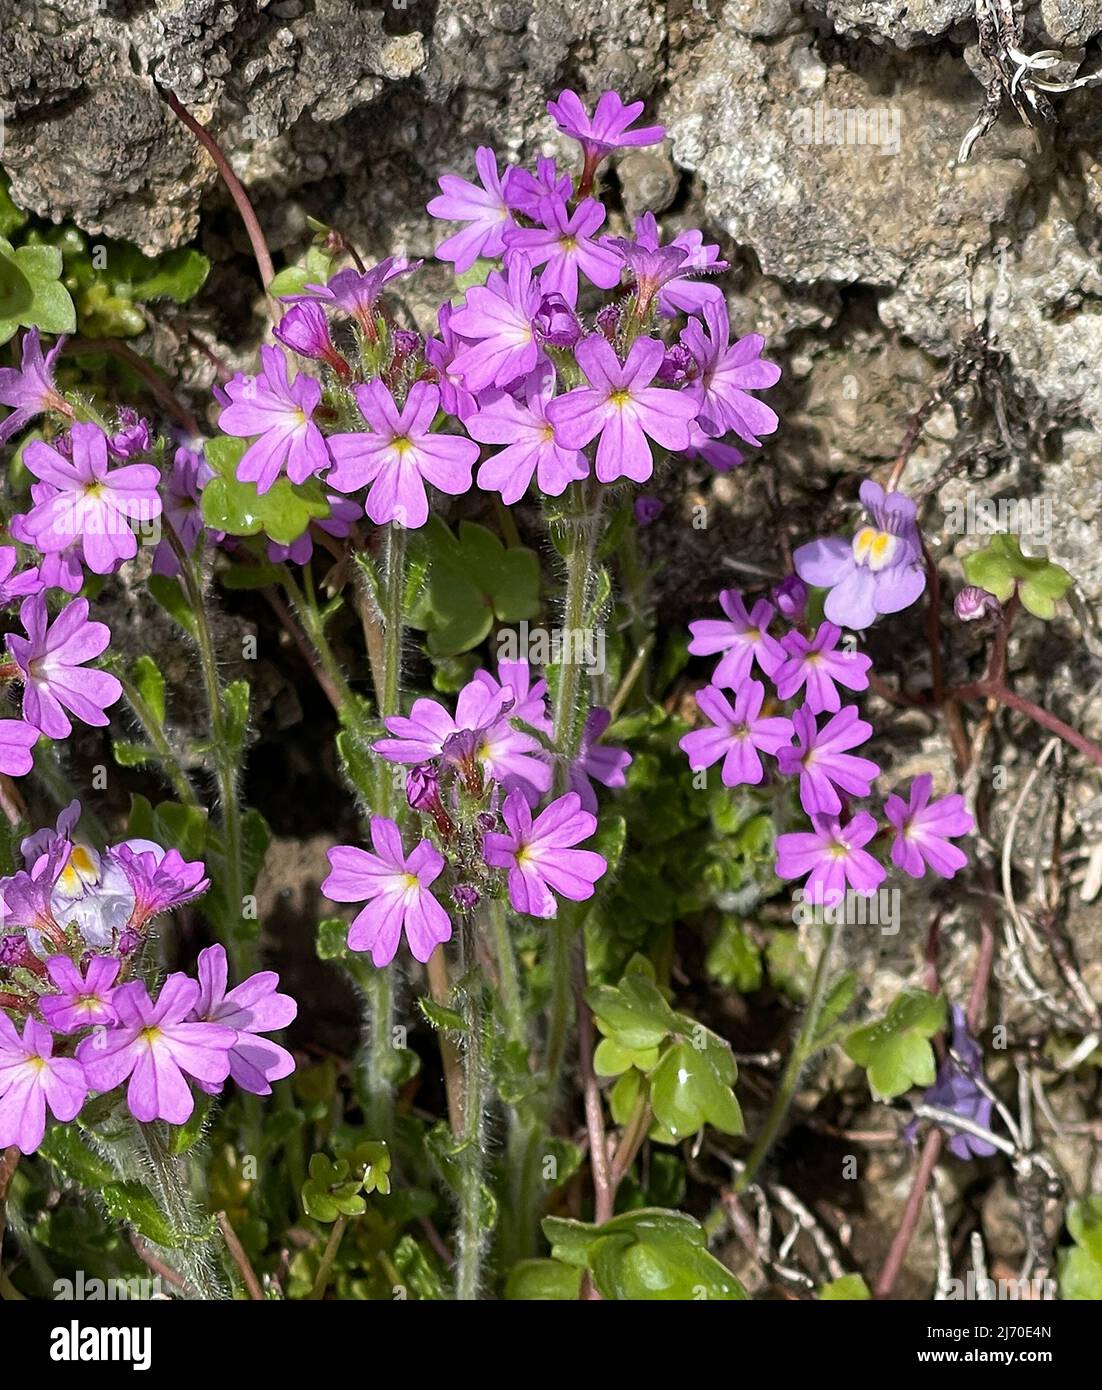 Alpine Balsam, Erinus alpinus, is a long-flowering rock garden perennial with dainty labiate flowers between May and August. Stock Photo